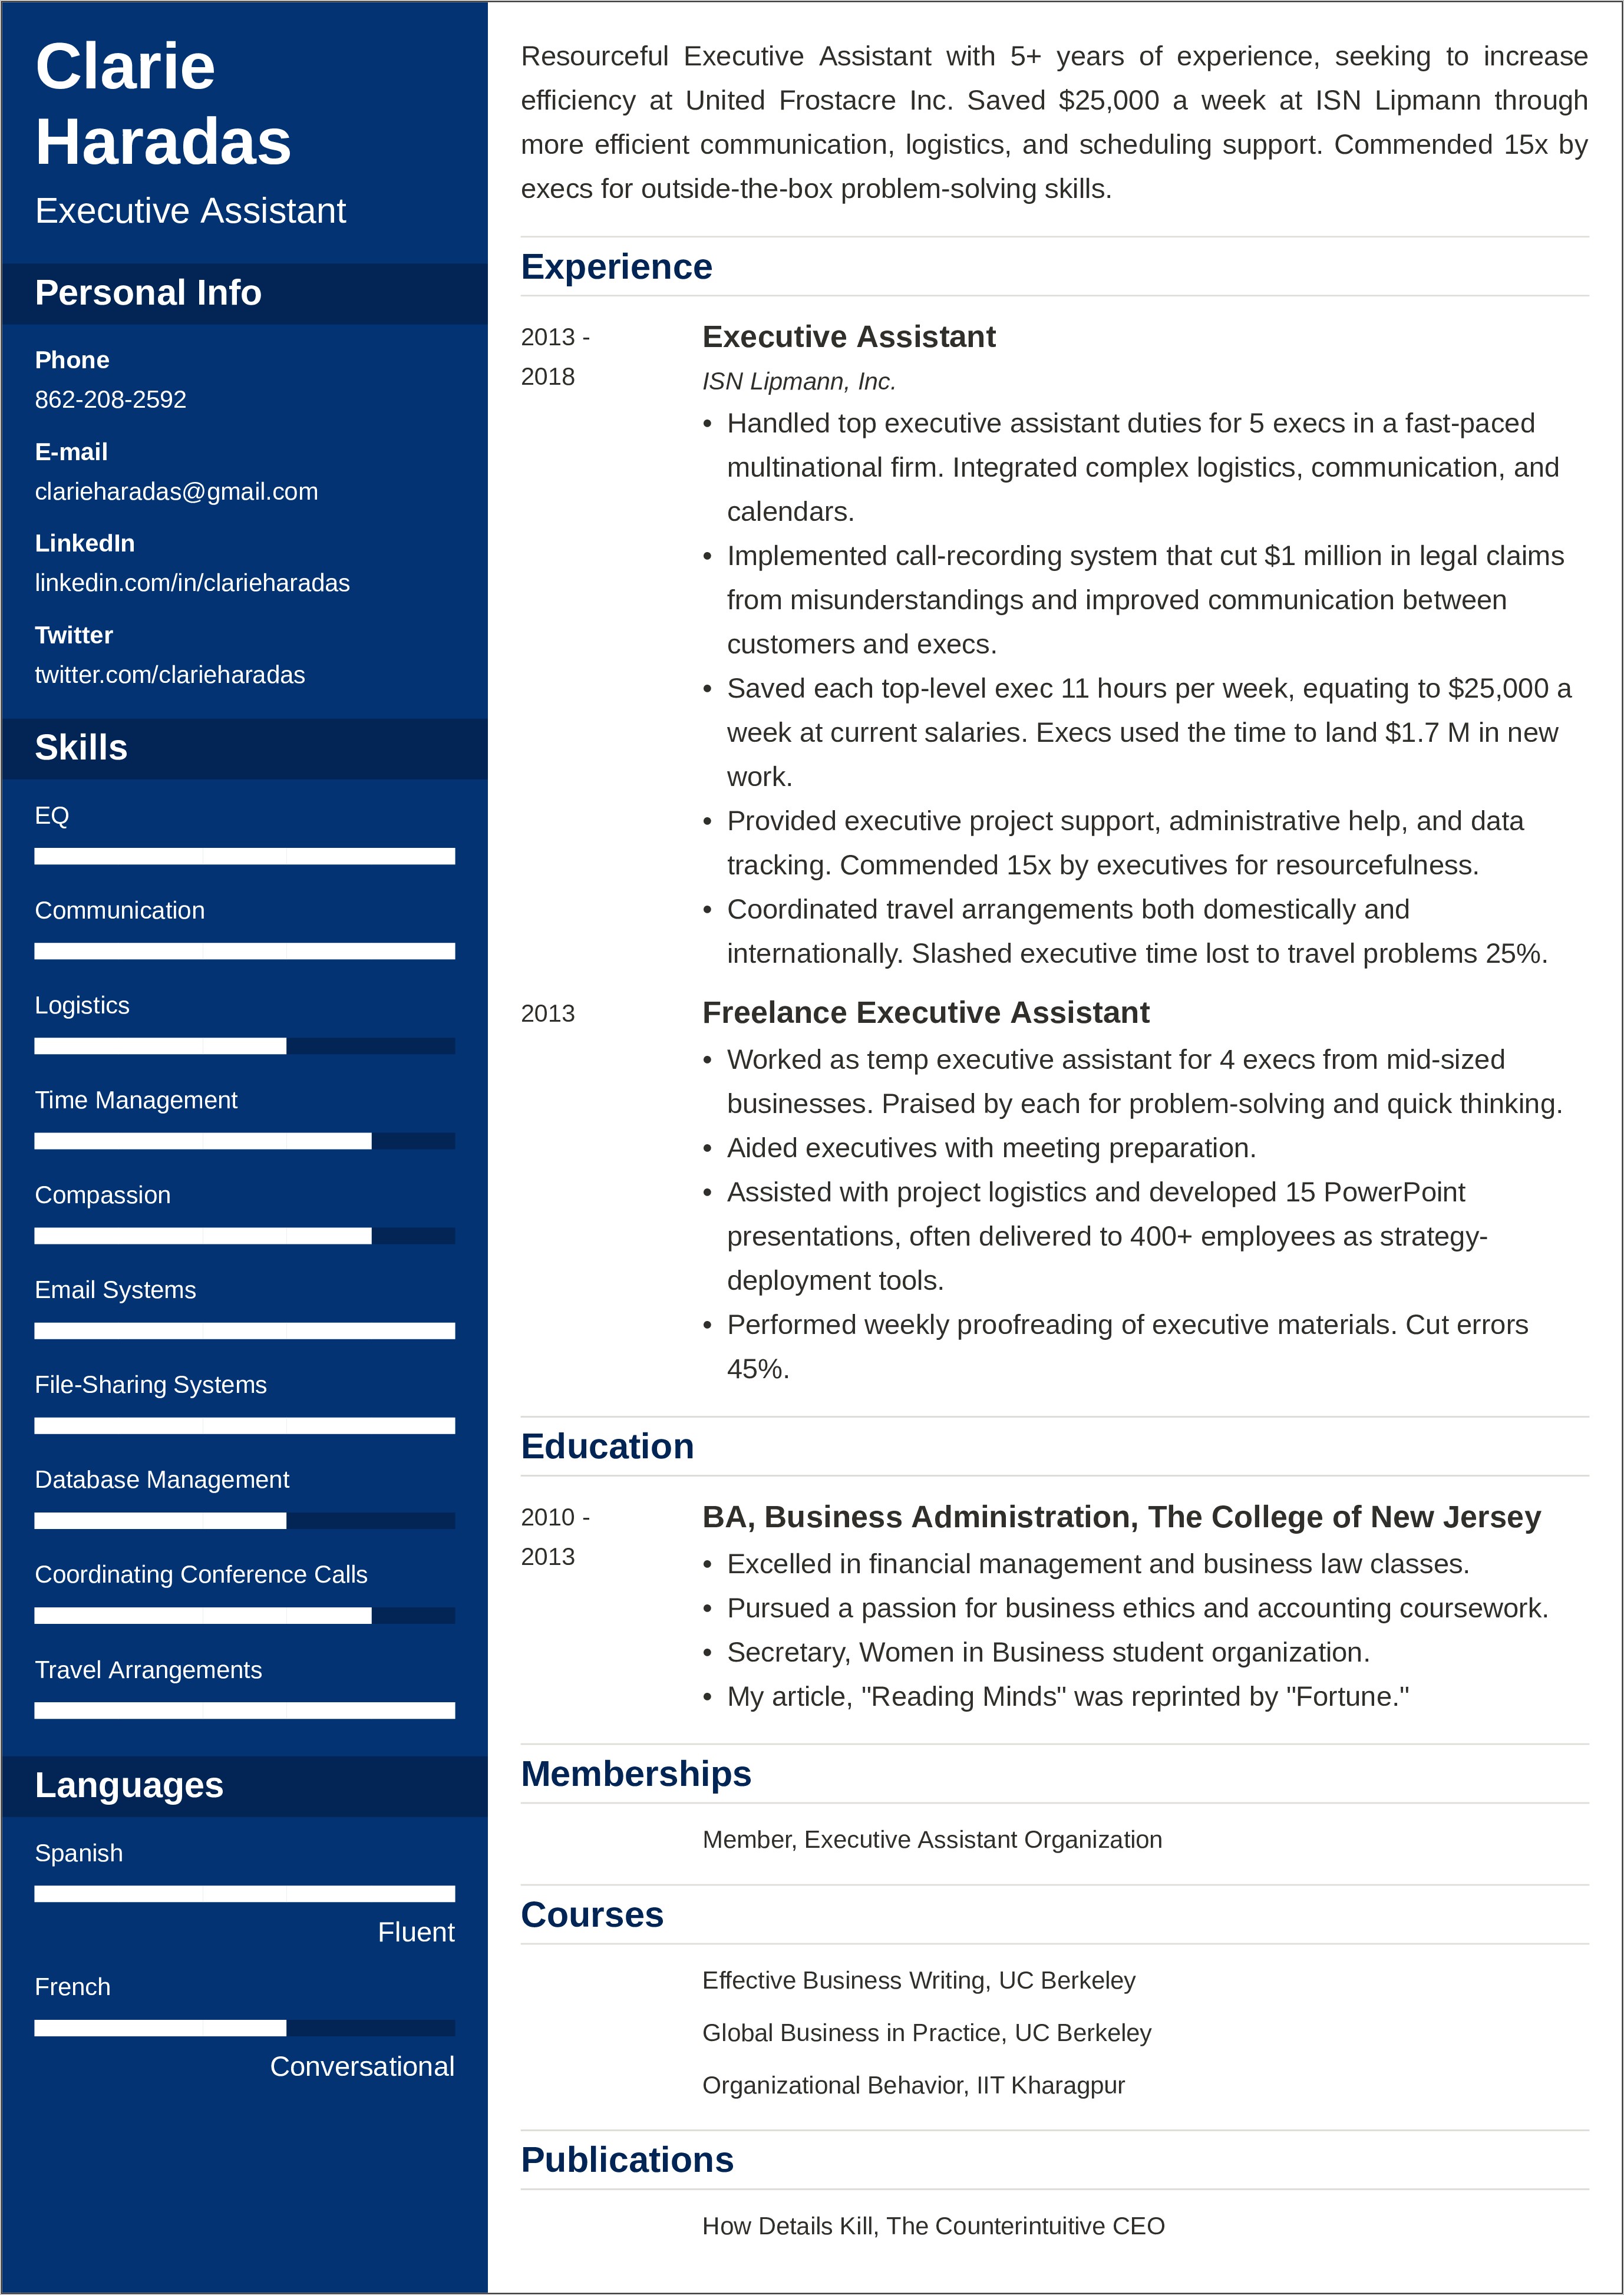 Description Of Responsibilities Job Application Same As Resume